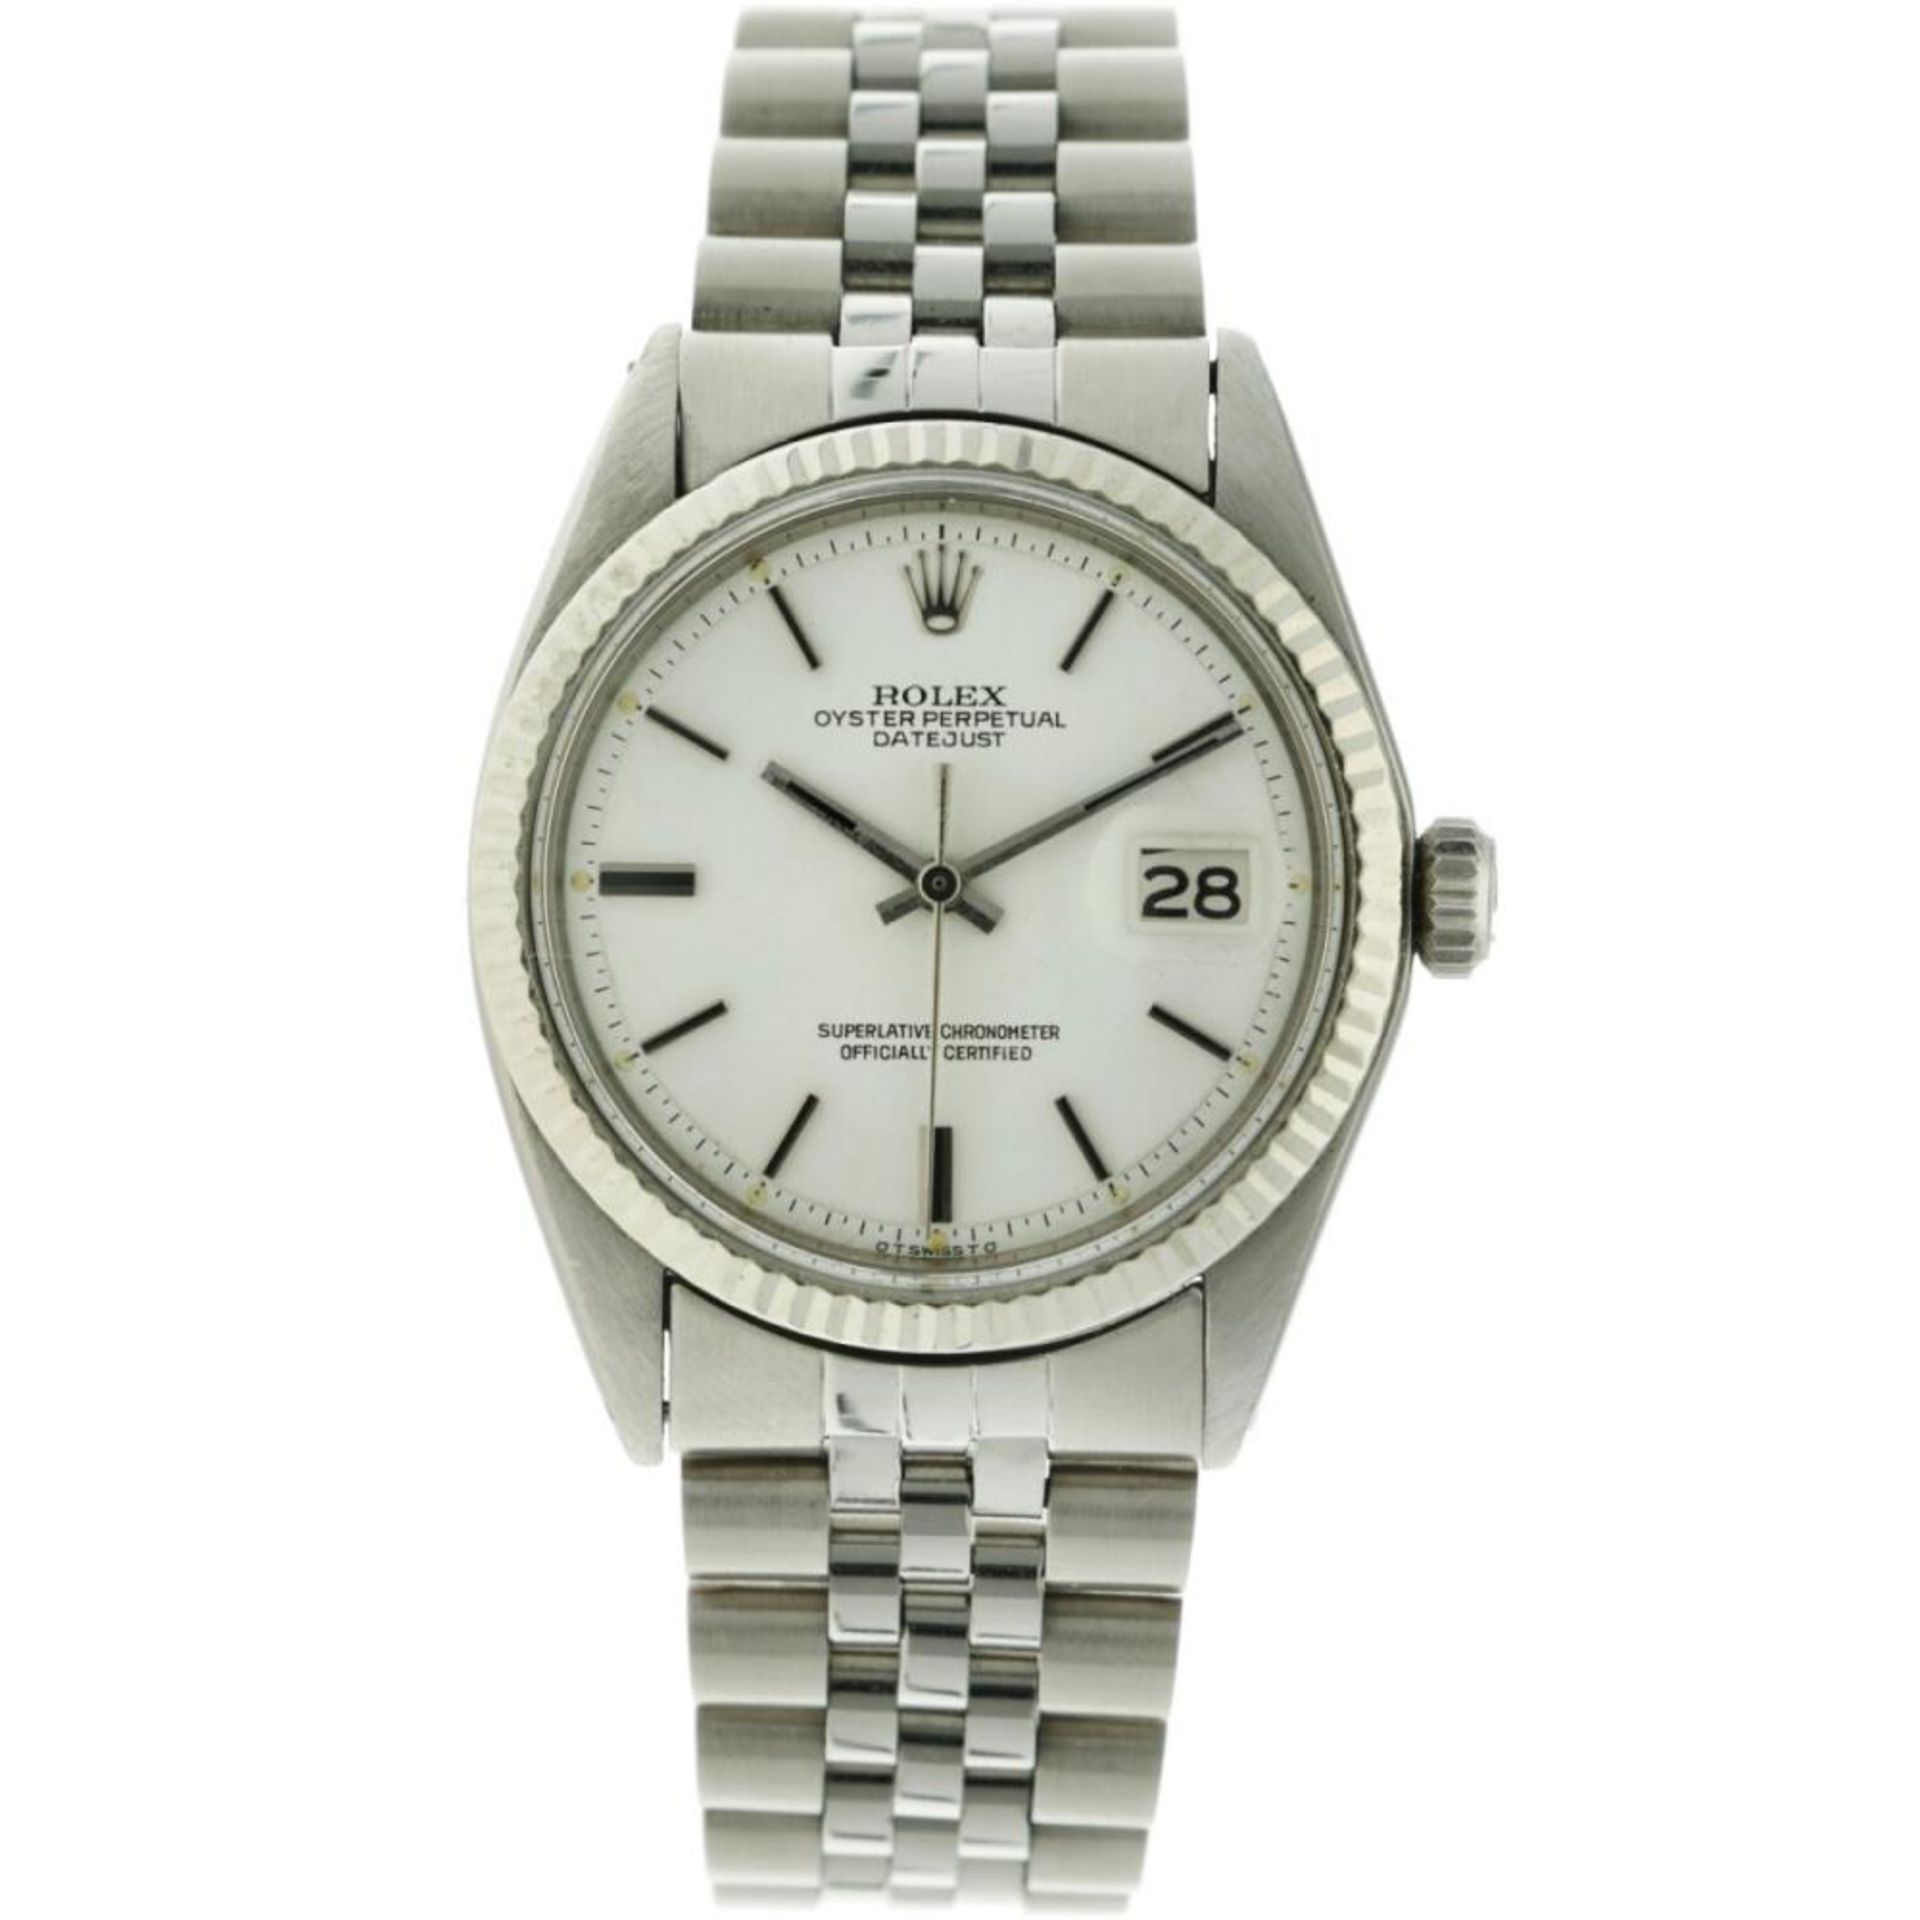 Rolex Datejust Sigma Dial 1601 - Men's watch -apprx. 1972.